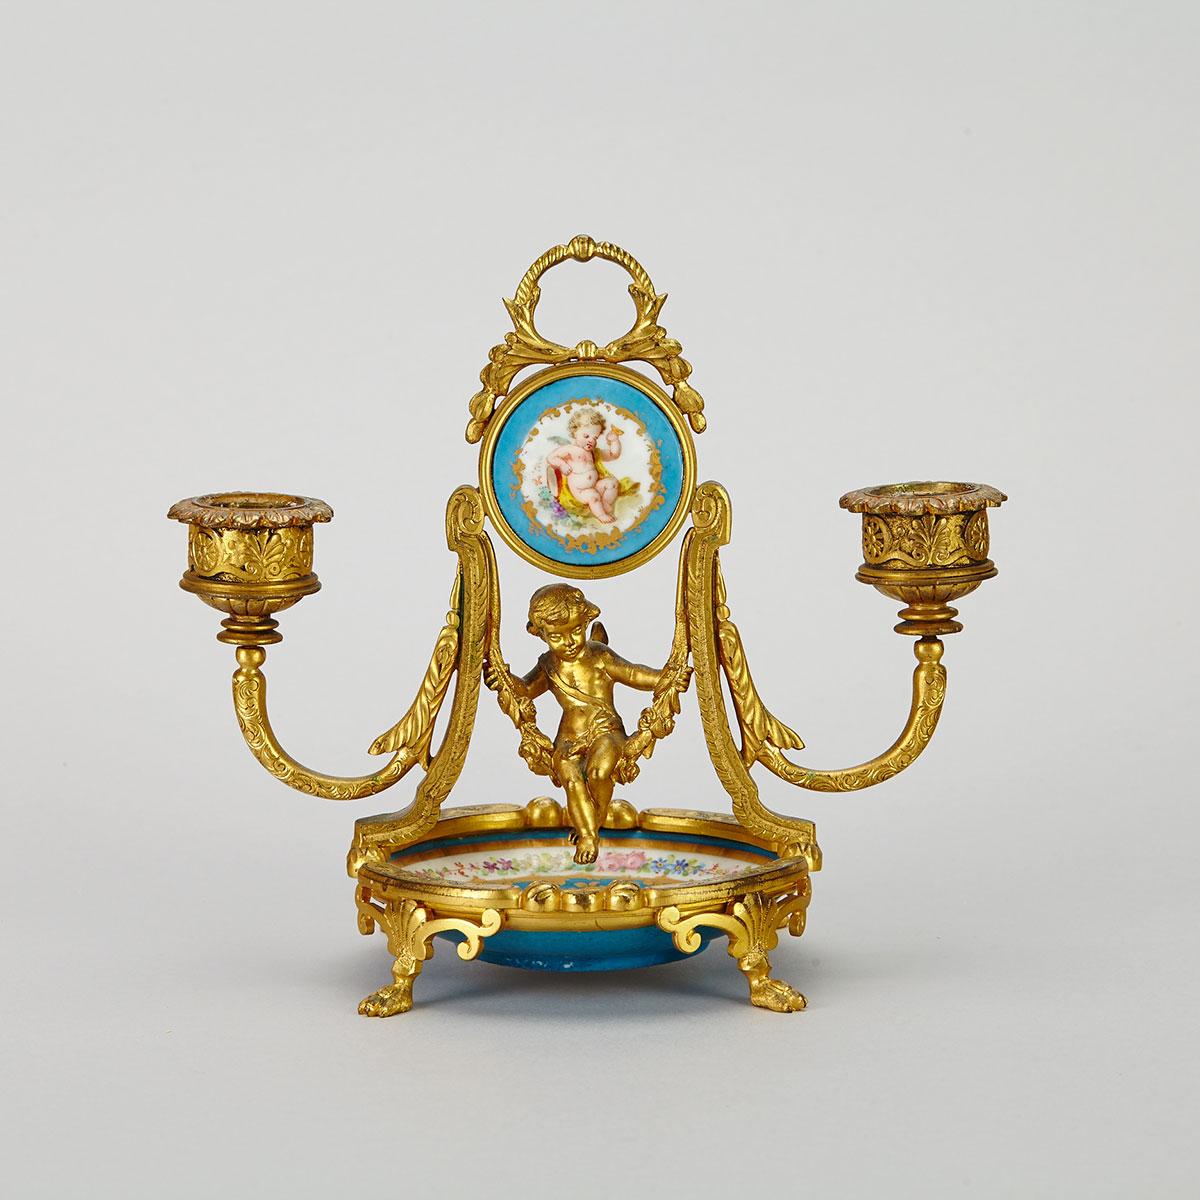 Sevres Porcelain Mounted Ormolu Desk Stand, 19th century